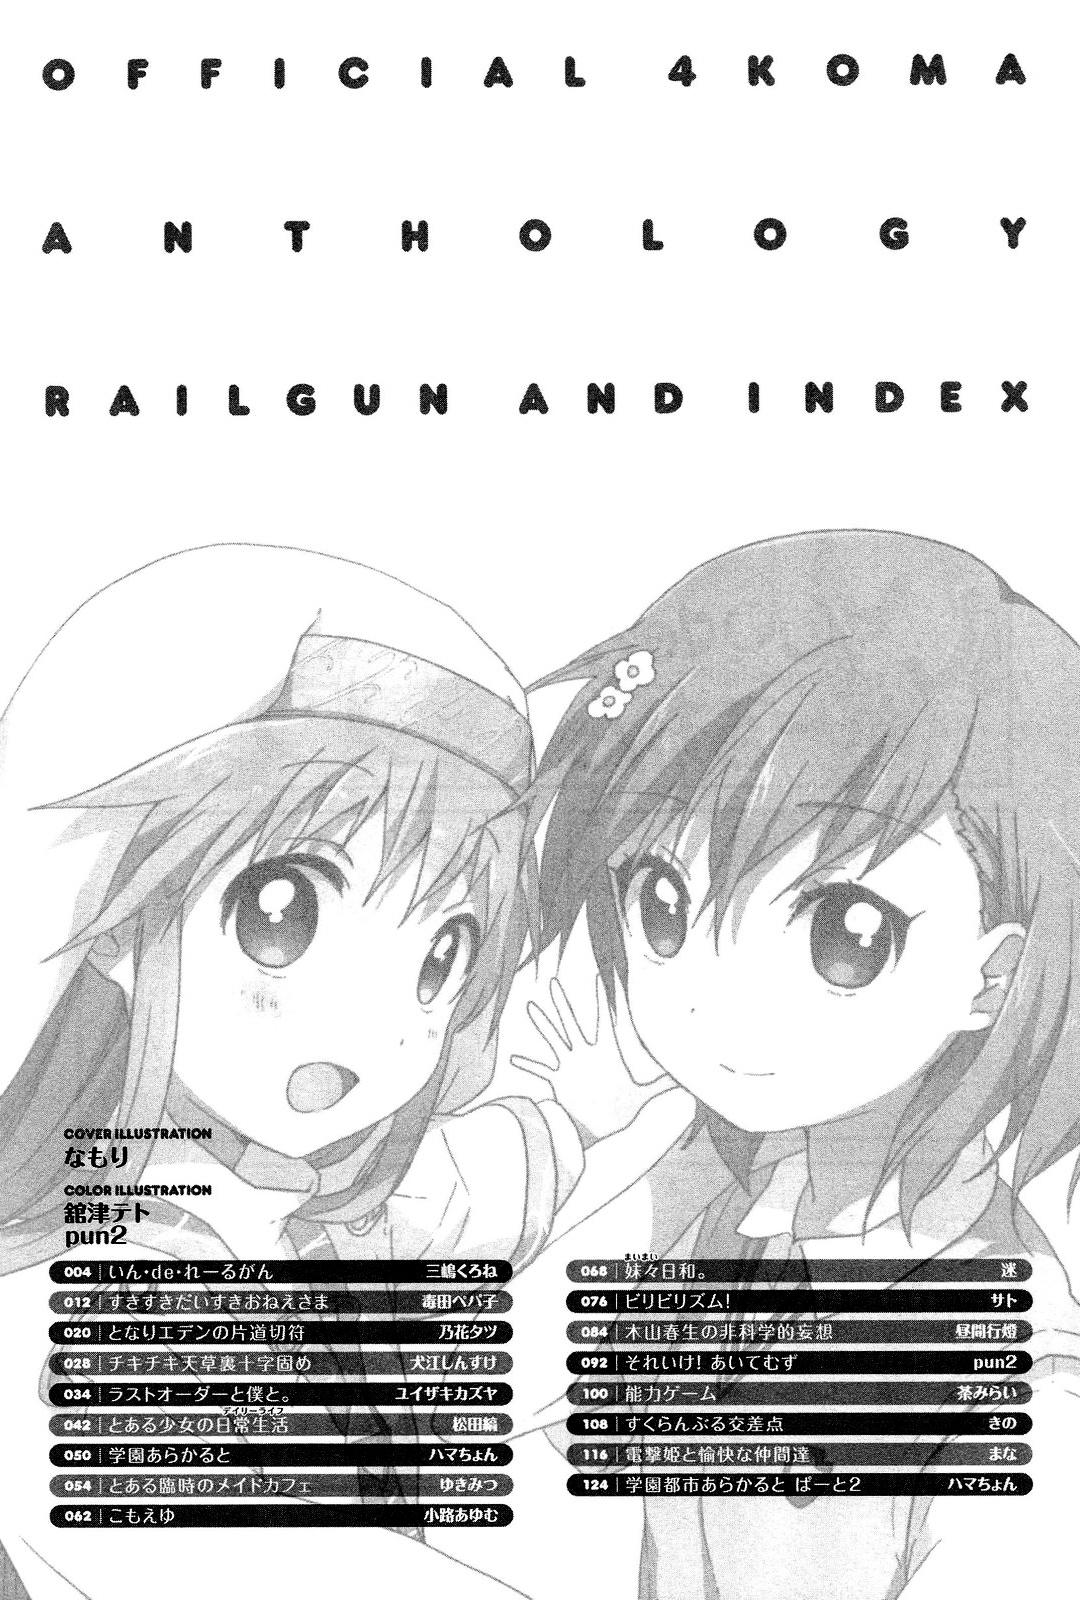 Toaru Majutsu No Index 4koma Koushiki Anthology Chapter 1 Read Toaru Majutsu No Index 4koma Koushiki Anthology Chapter 1 Online At Allmanga Us Page 5